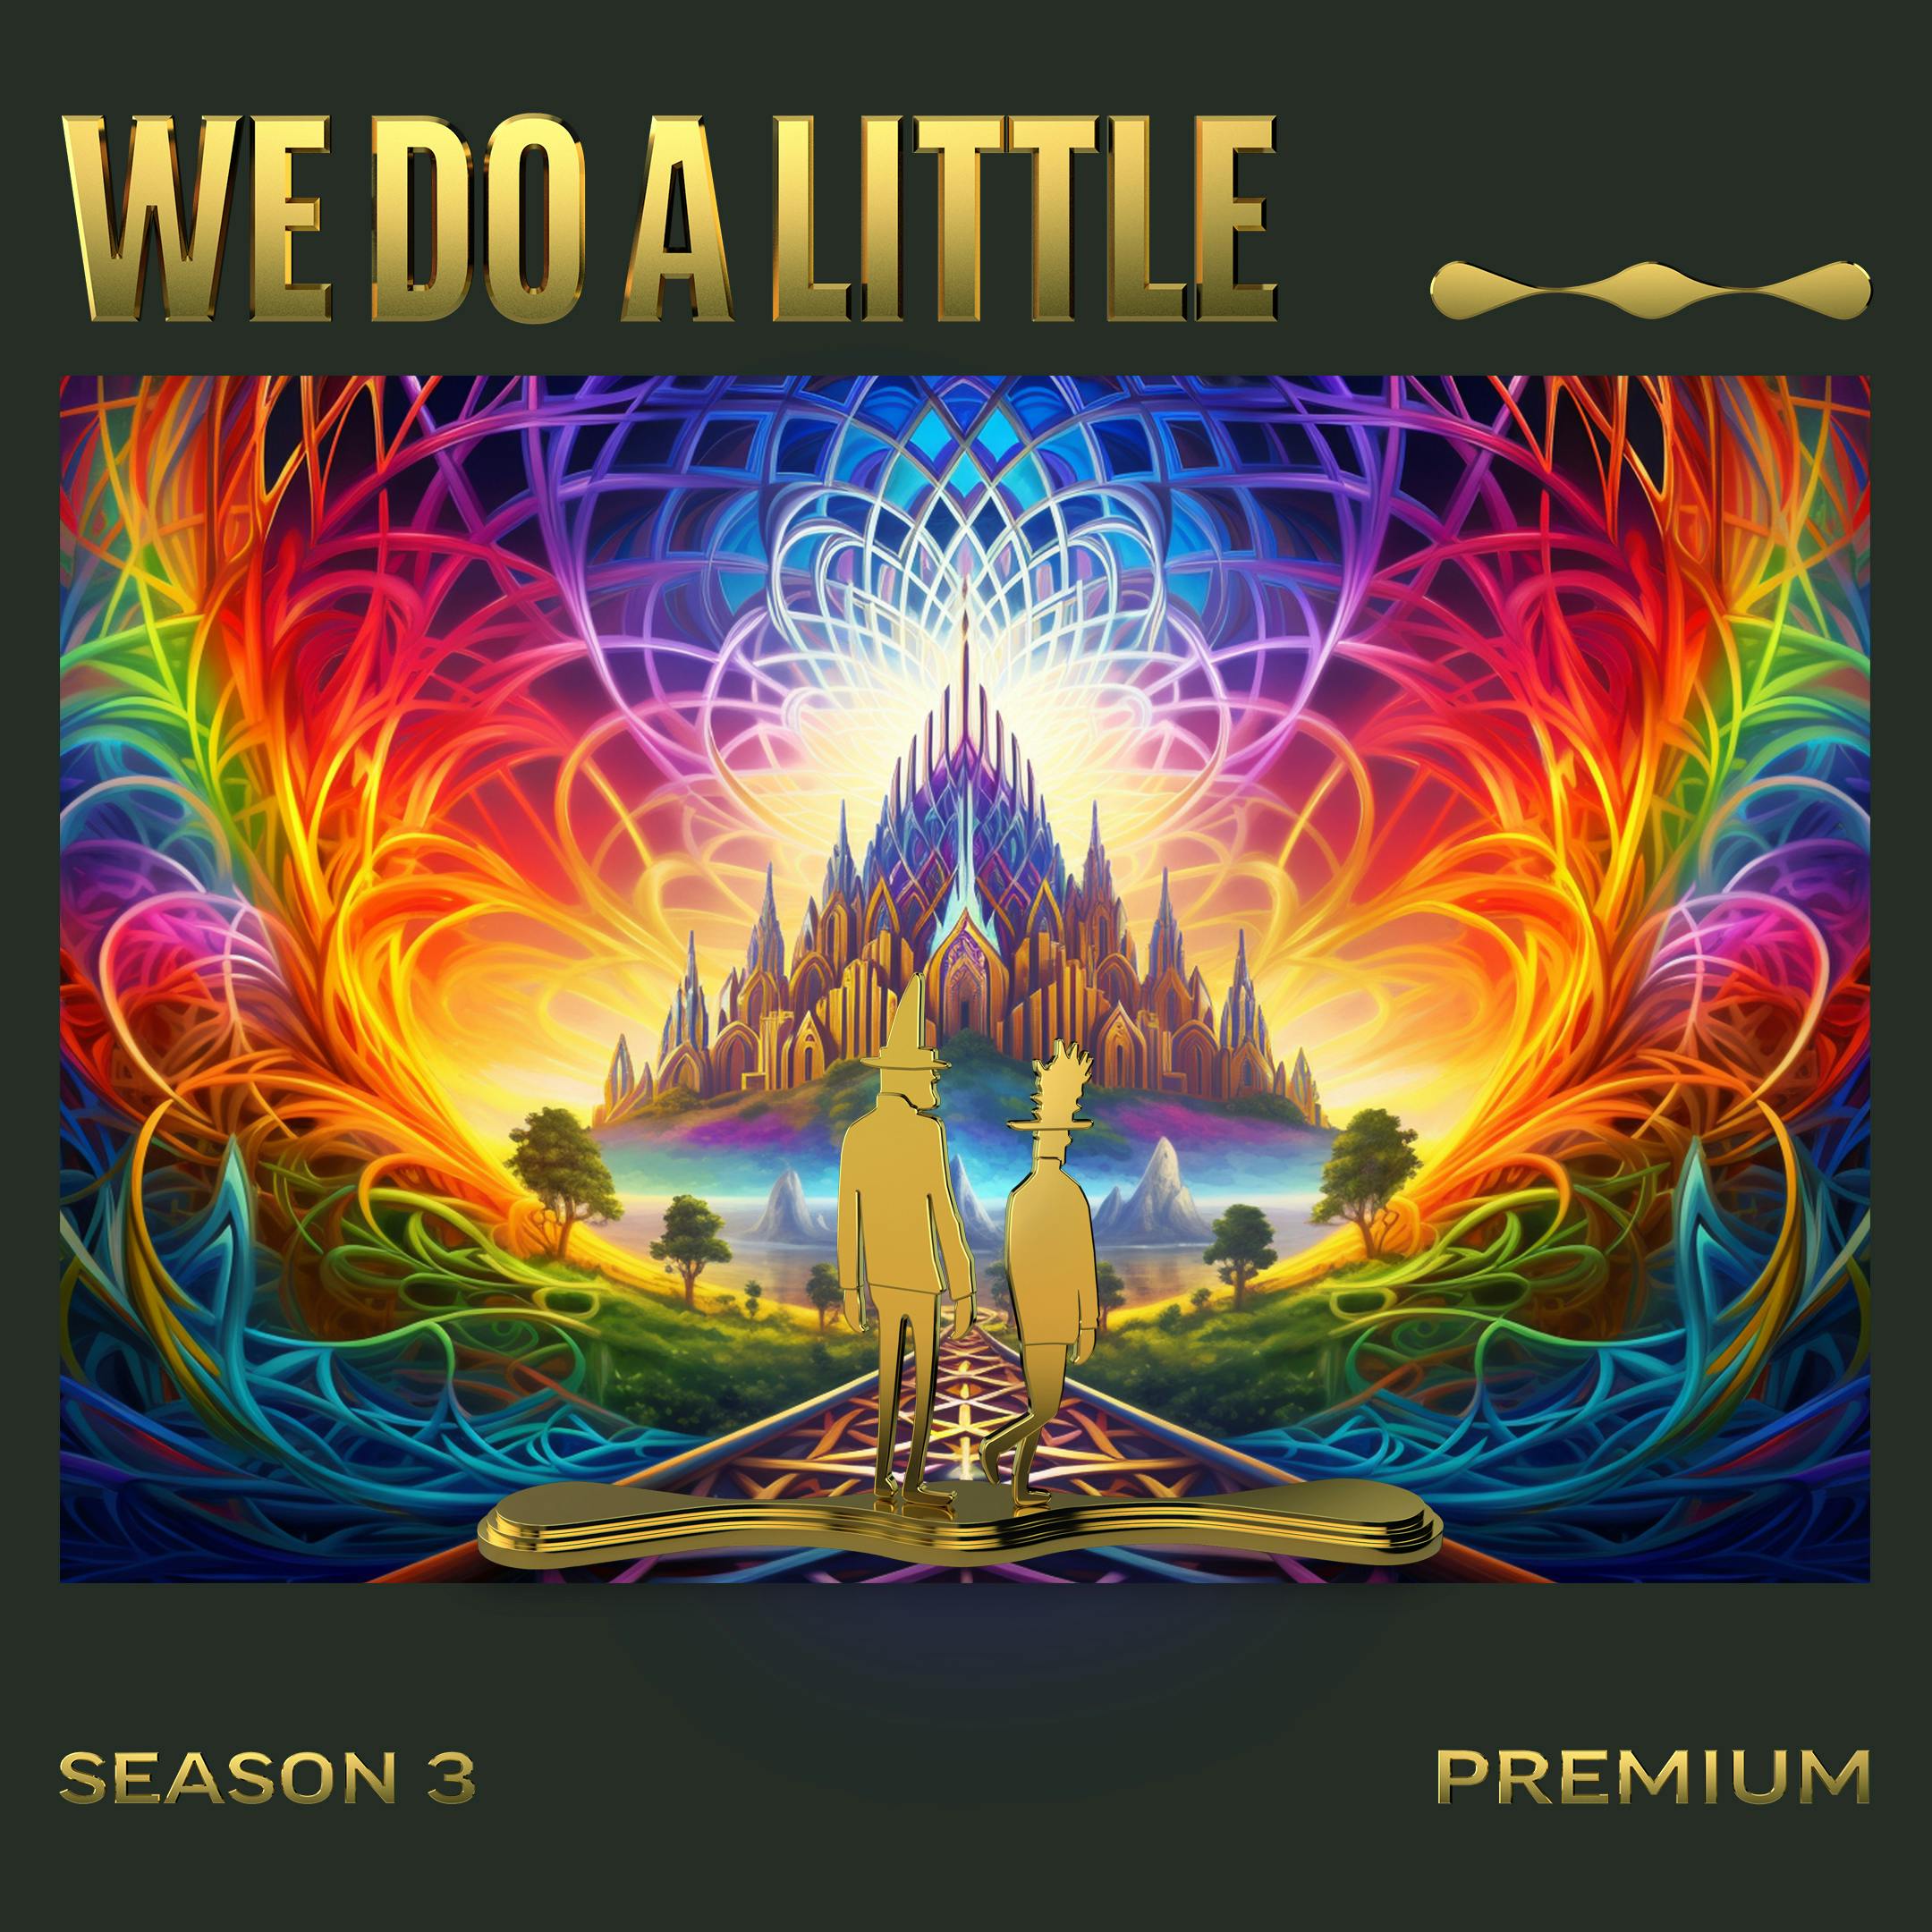 We Do A Little Season 3 Premium Edition